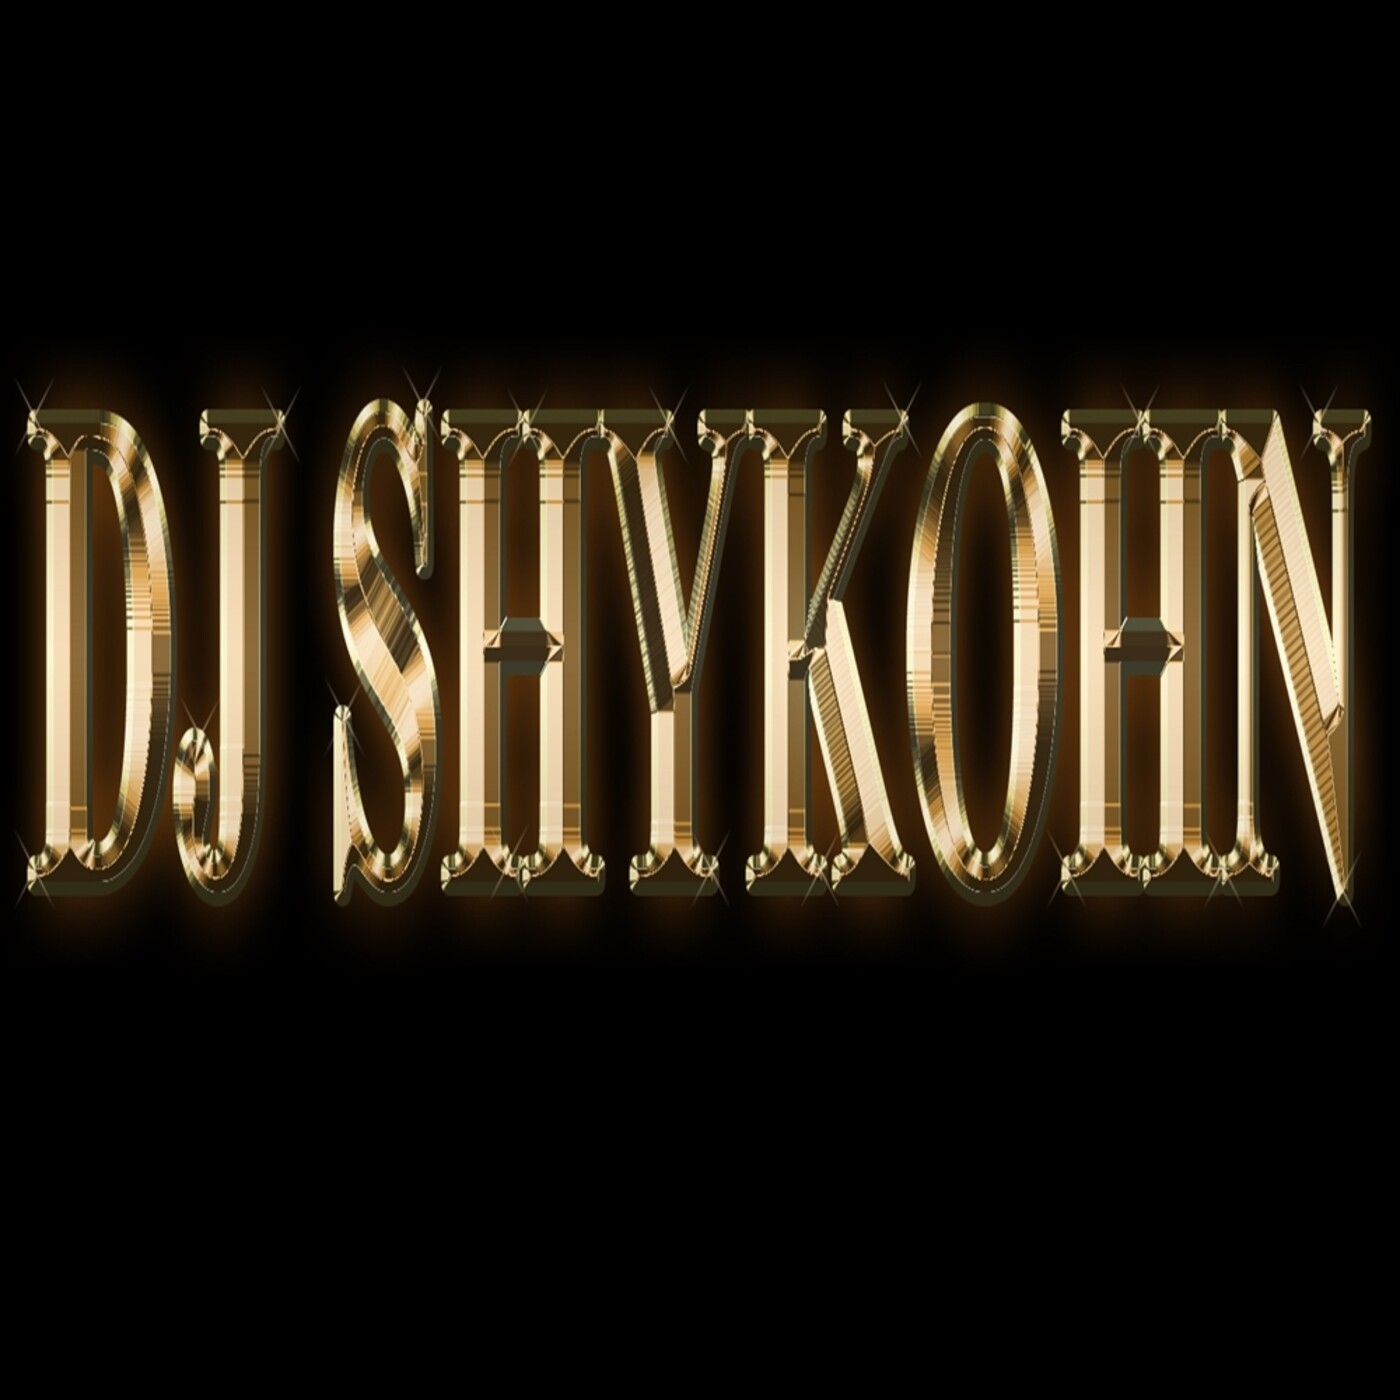 Remix reggaeton nuevo 7 - dj shykohn